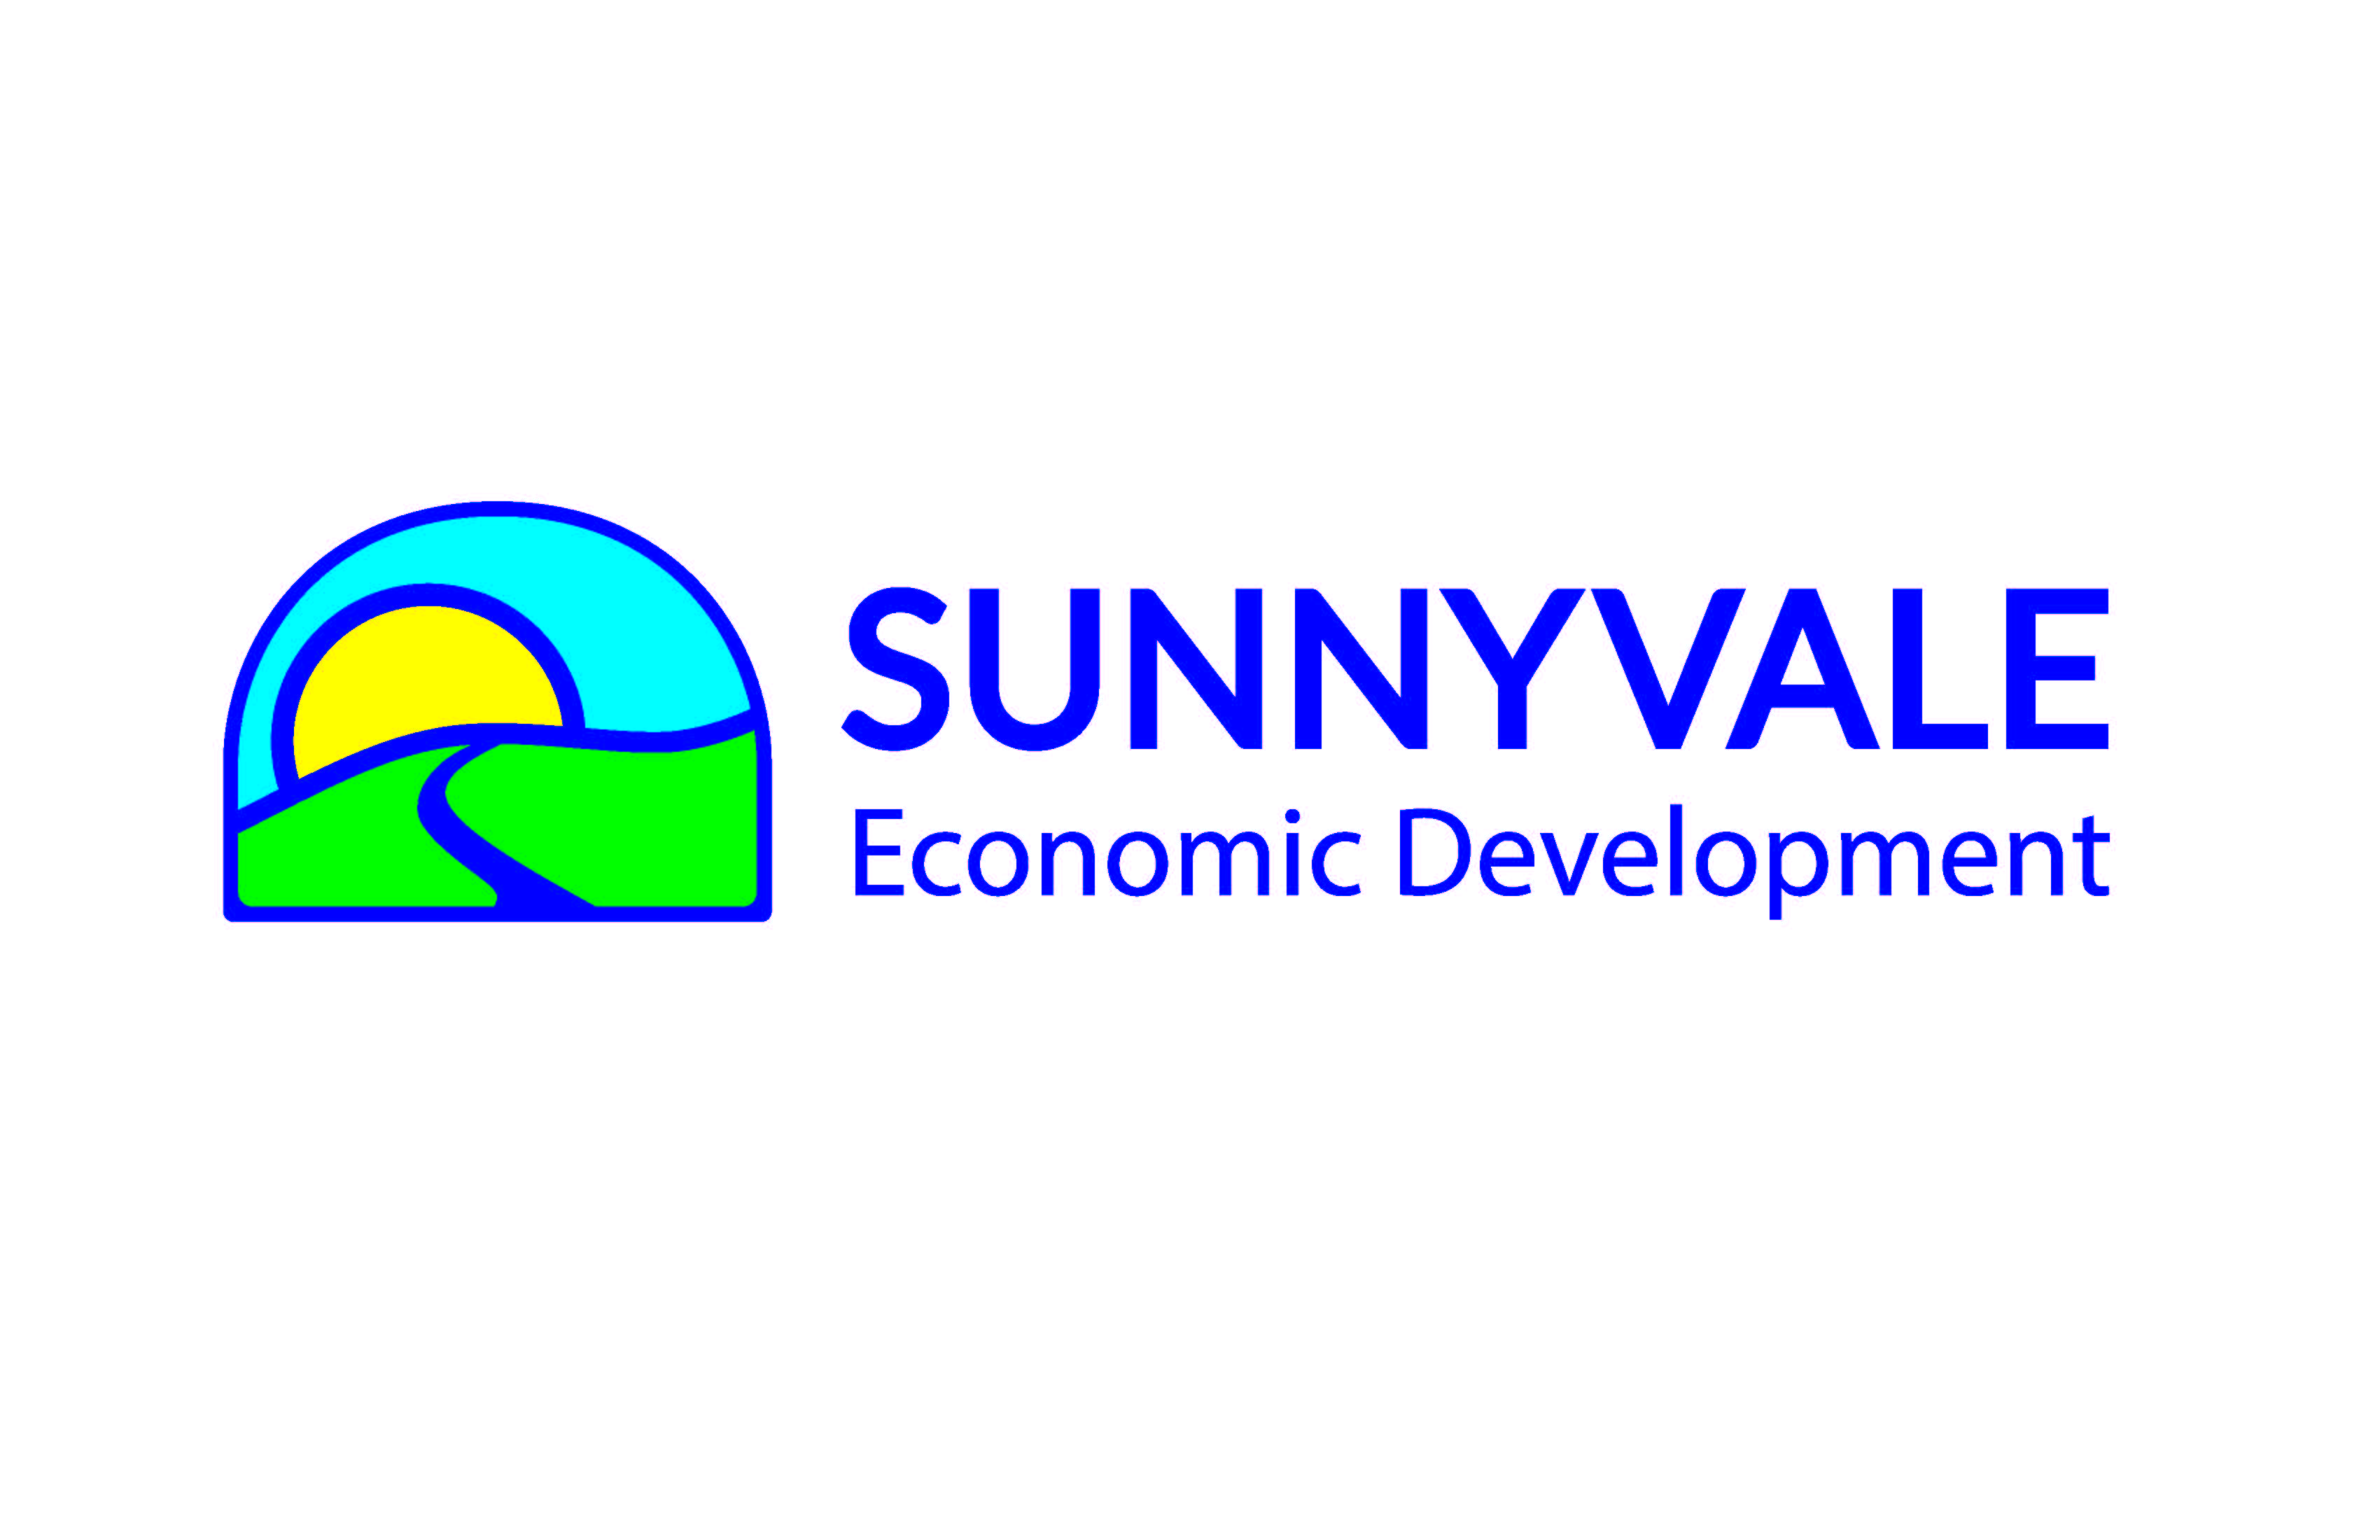 Sunnyvale Economic Development Corporations